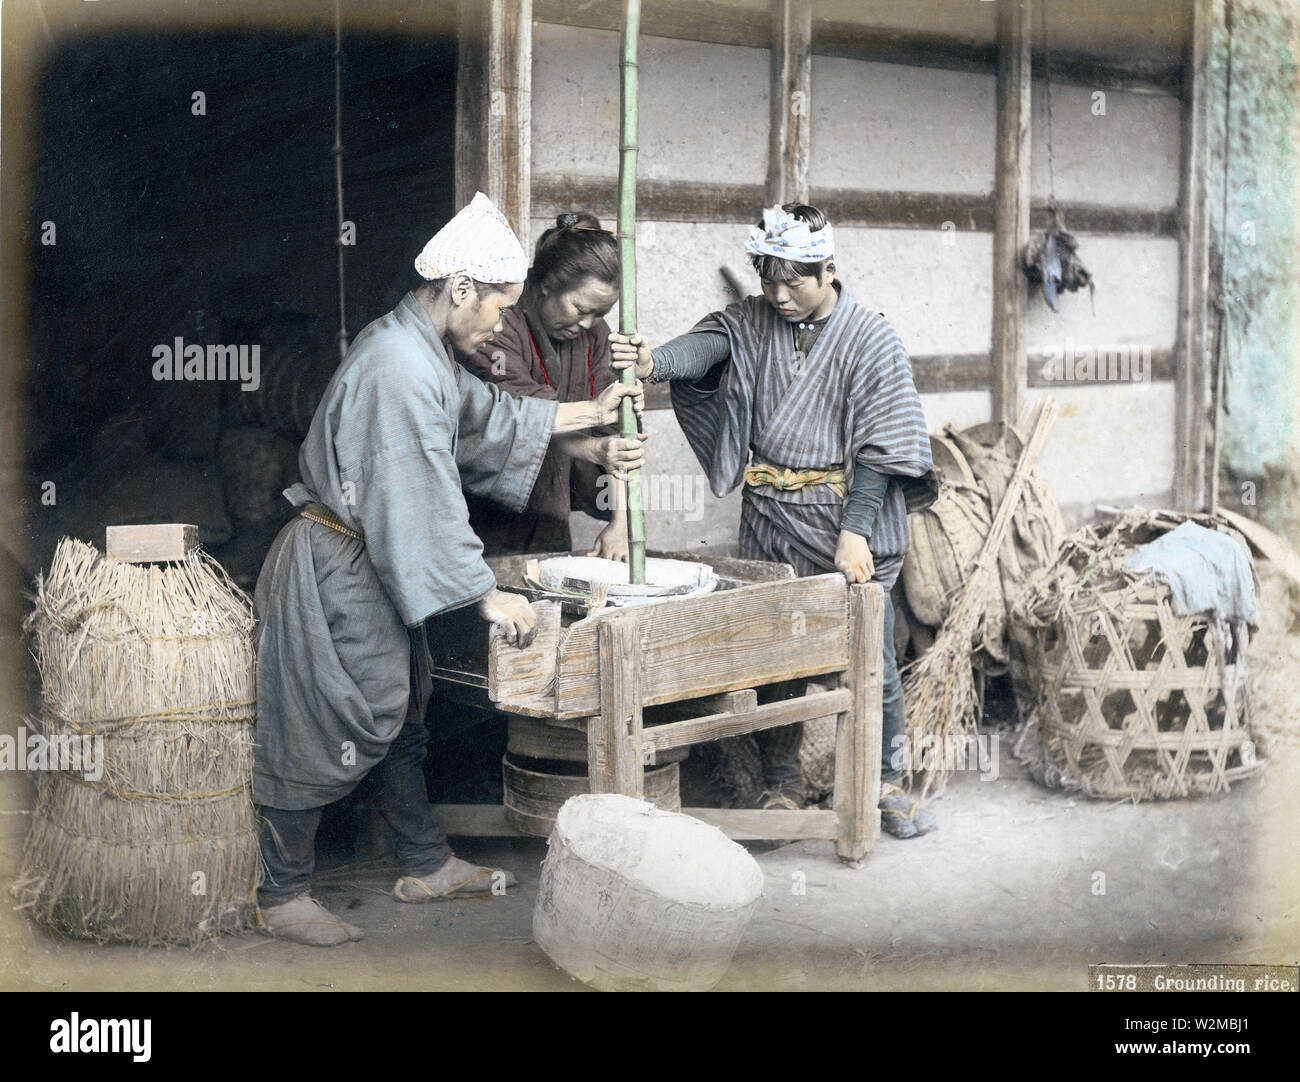 [ 1880s Japan - Japanese Farmers Grinding Rice ] —   Japanese farmers grinding rice to remove the bran, 1880s.  19th century vintage albumen photograph. Stock Photo